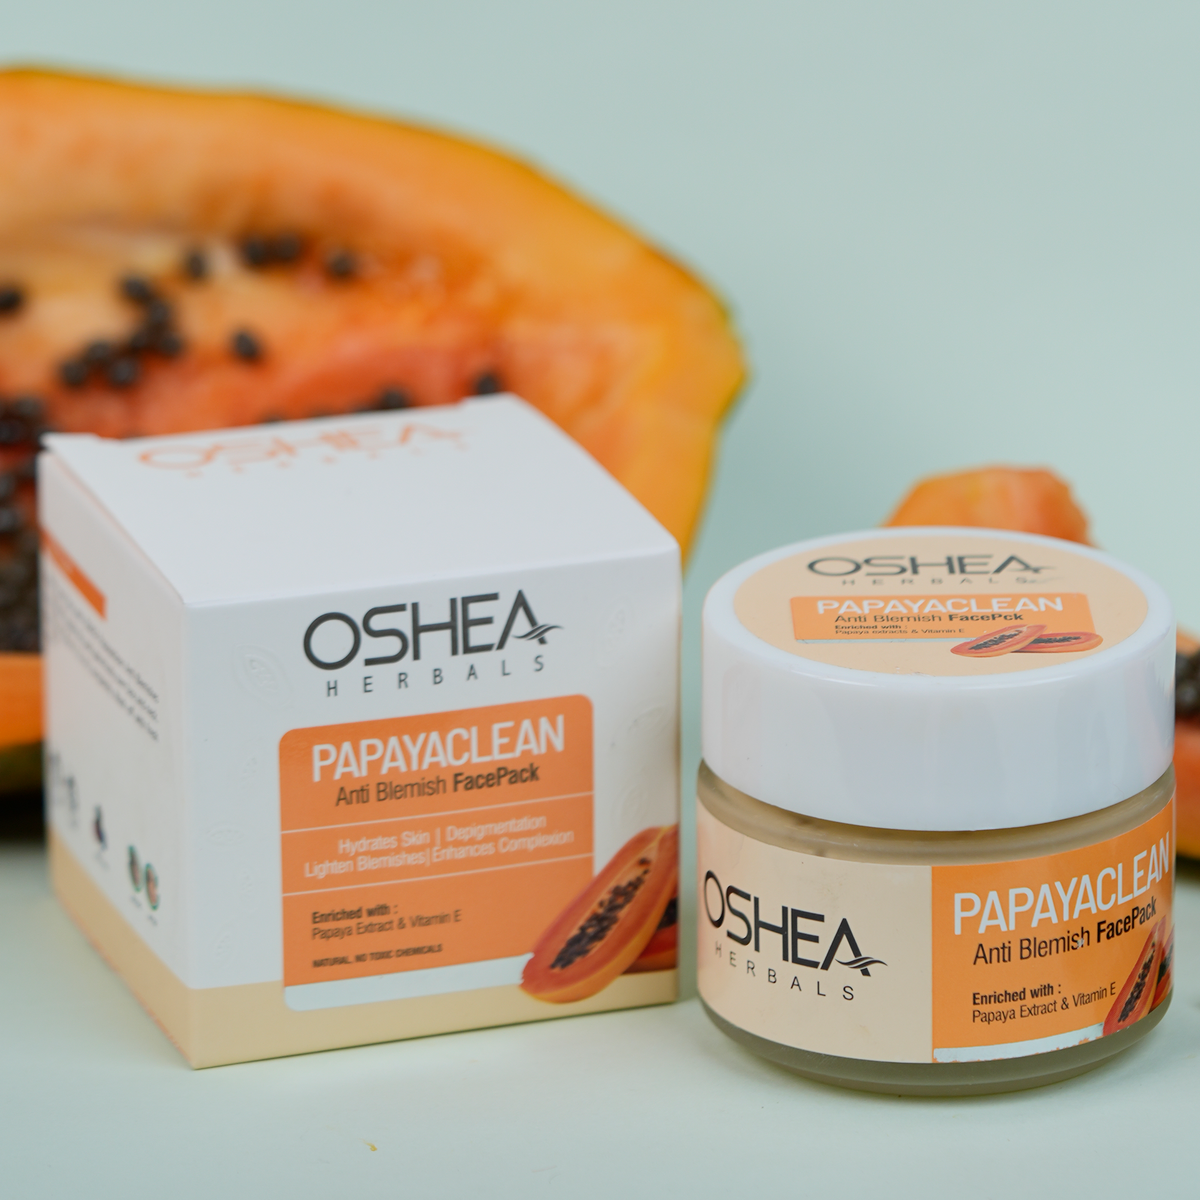 Papayaclean Anti Blemishes Face pack Oshea Herbals